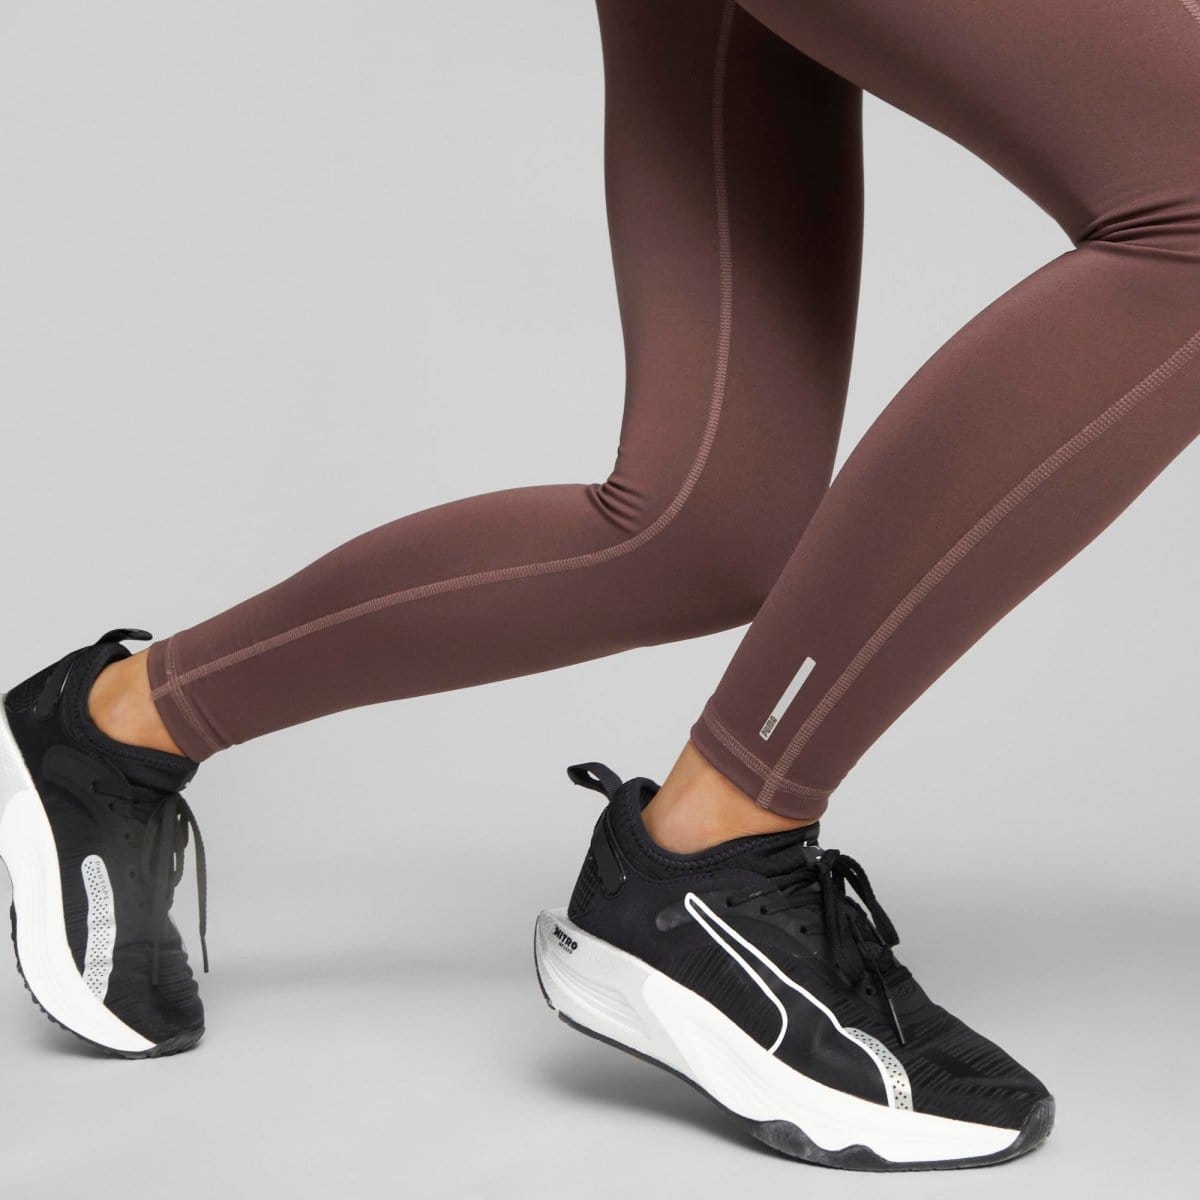 PUMA Women's Athletic Graphic Full-Length Leggings in Parisian Night Size XS